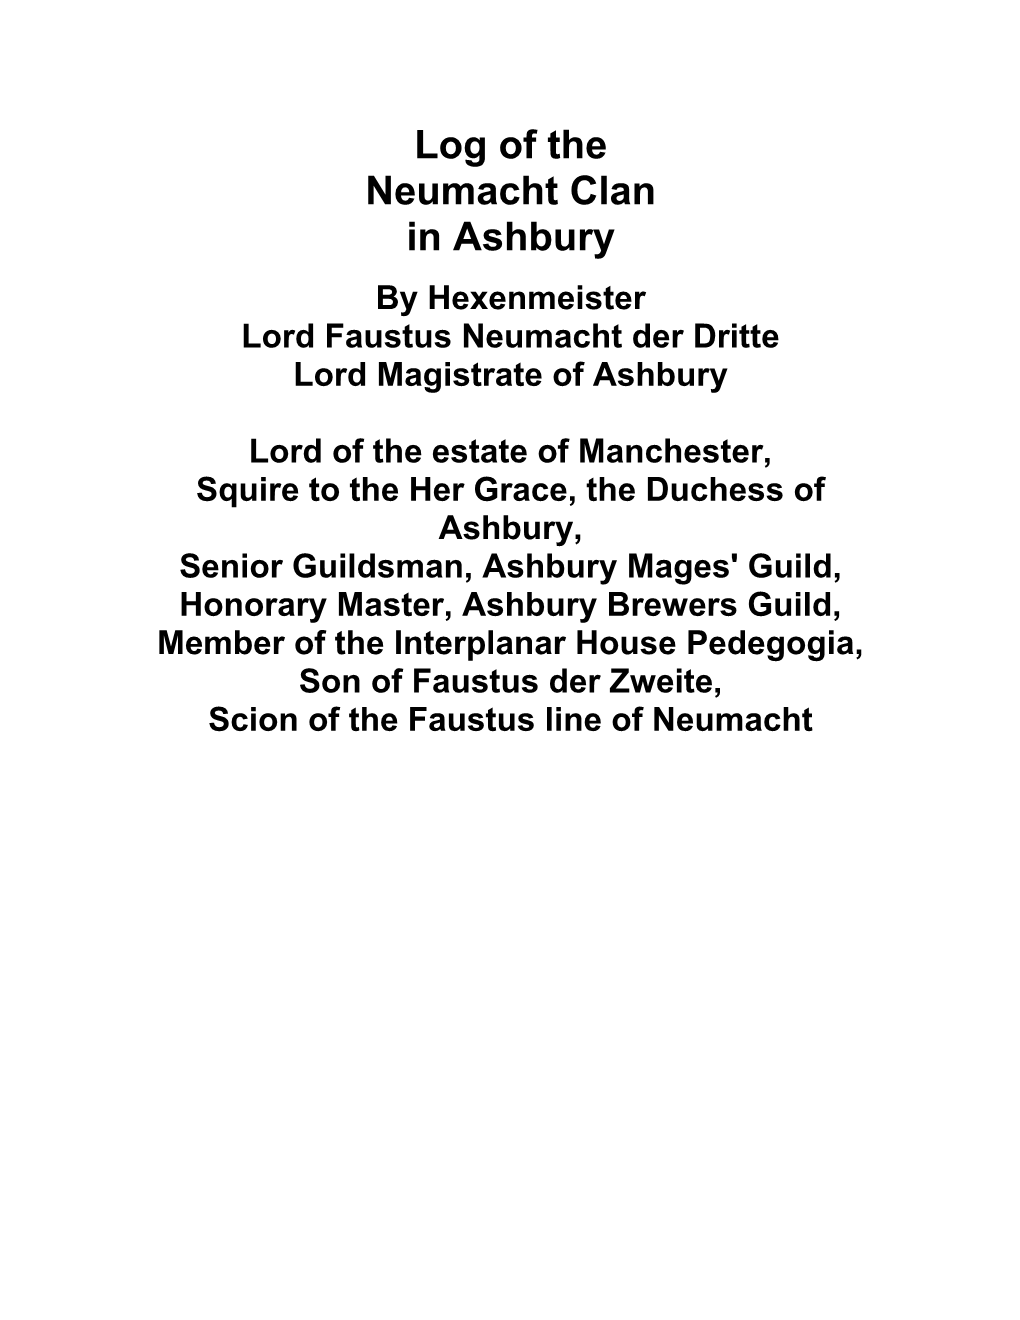 Log of the Neumacht Clan in Ashbury